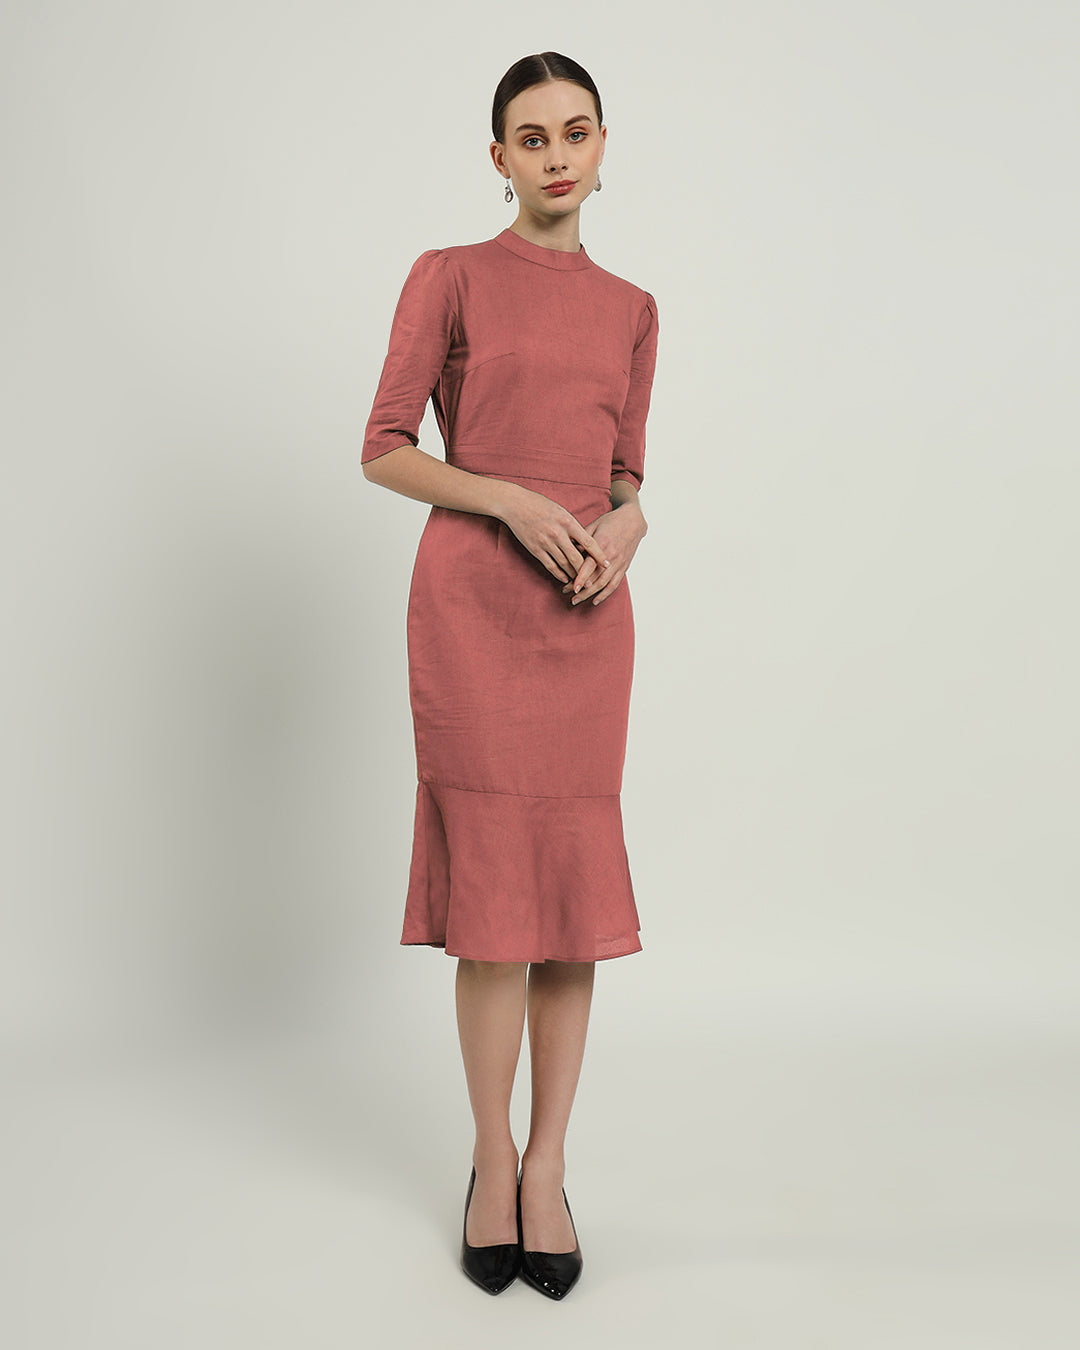 The Charlotte Ivory Pink Cotton Dress